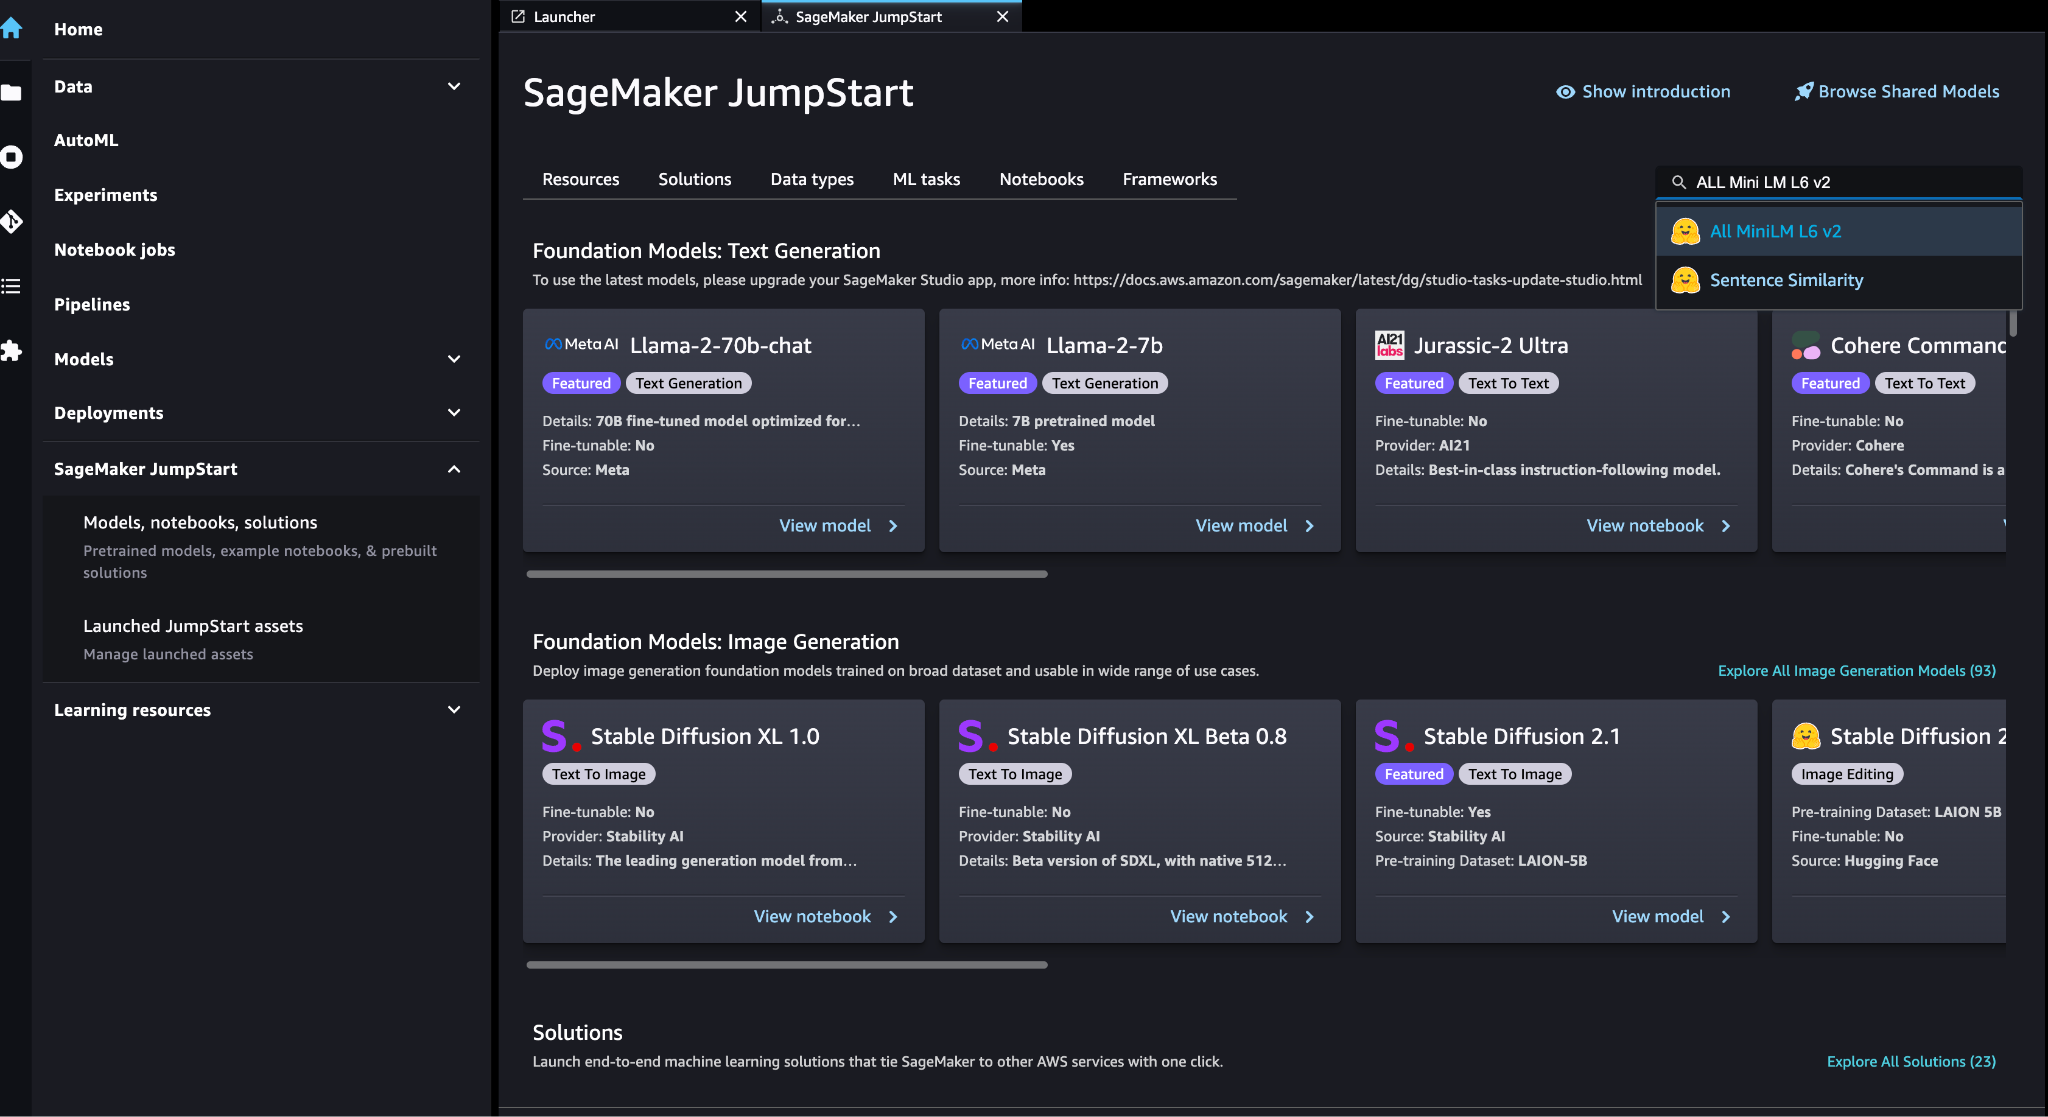 SageMaker JumpStart Modele, notebooki, rozwiązania